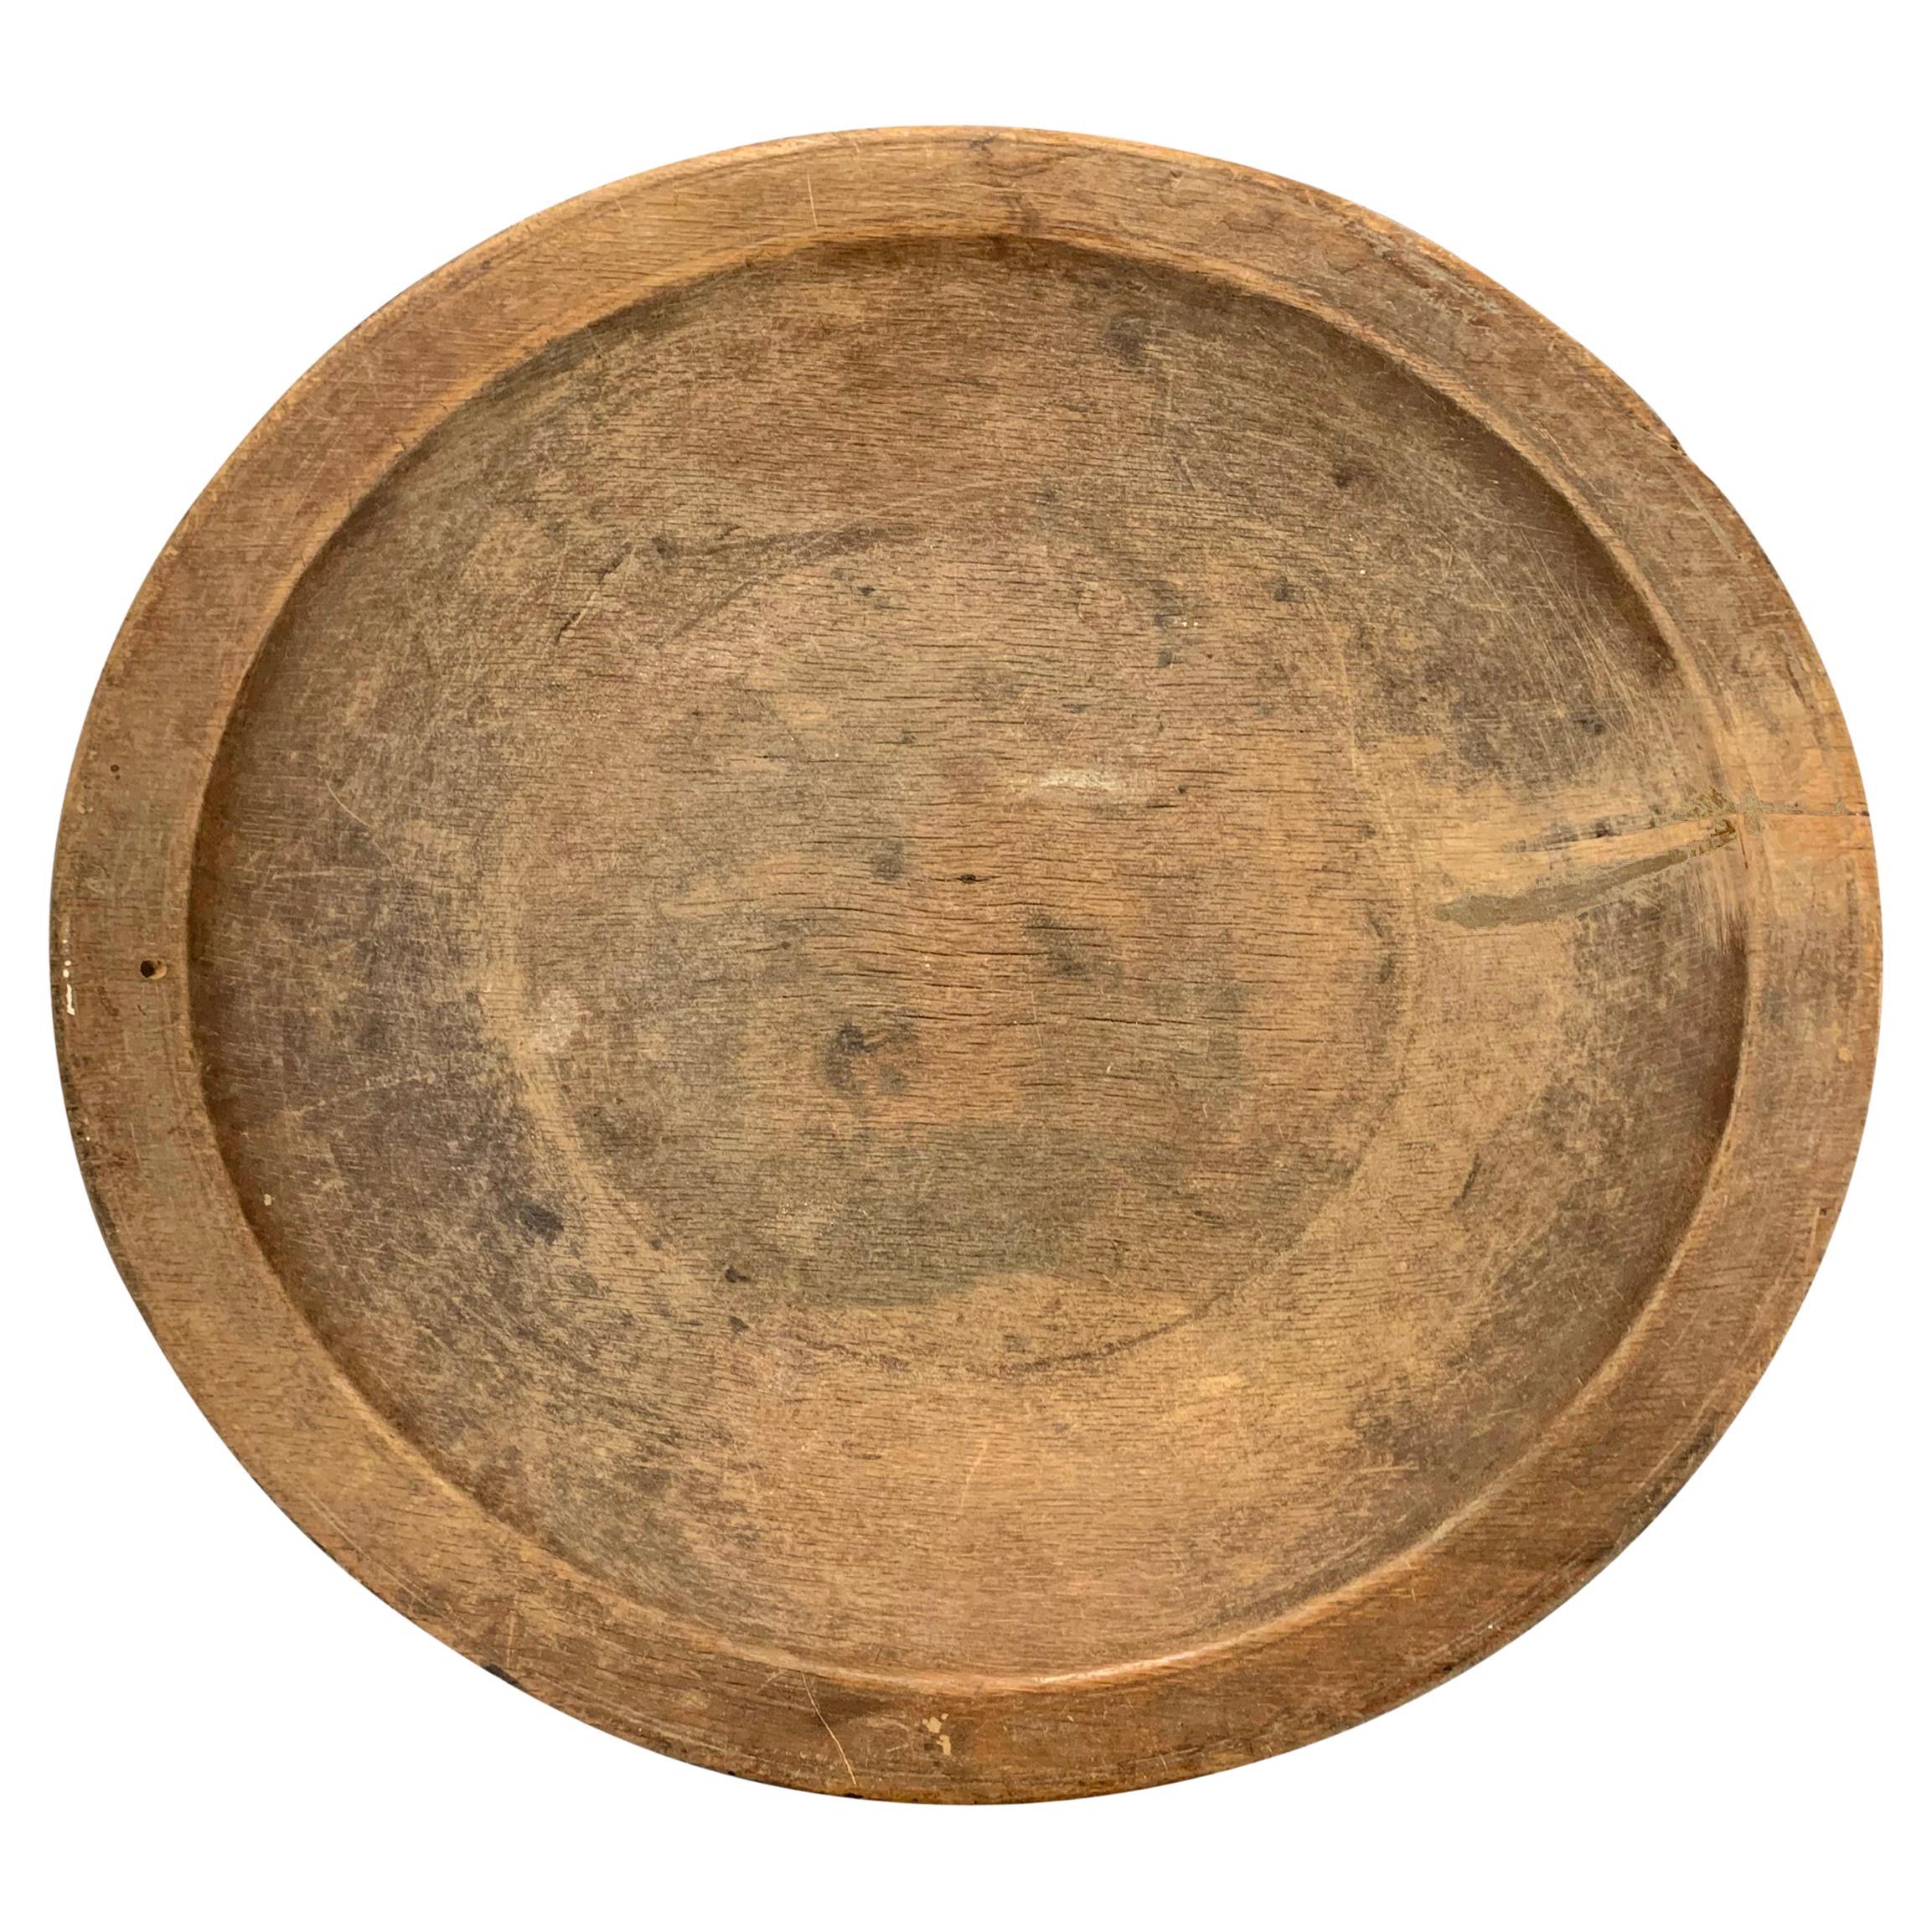 18th Century American Turned Wood Bowl